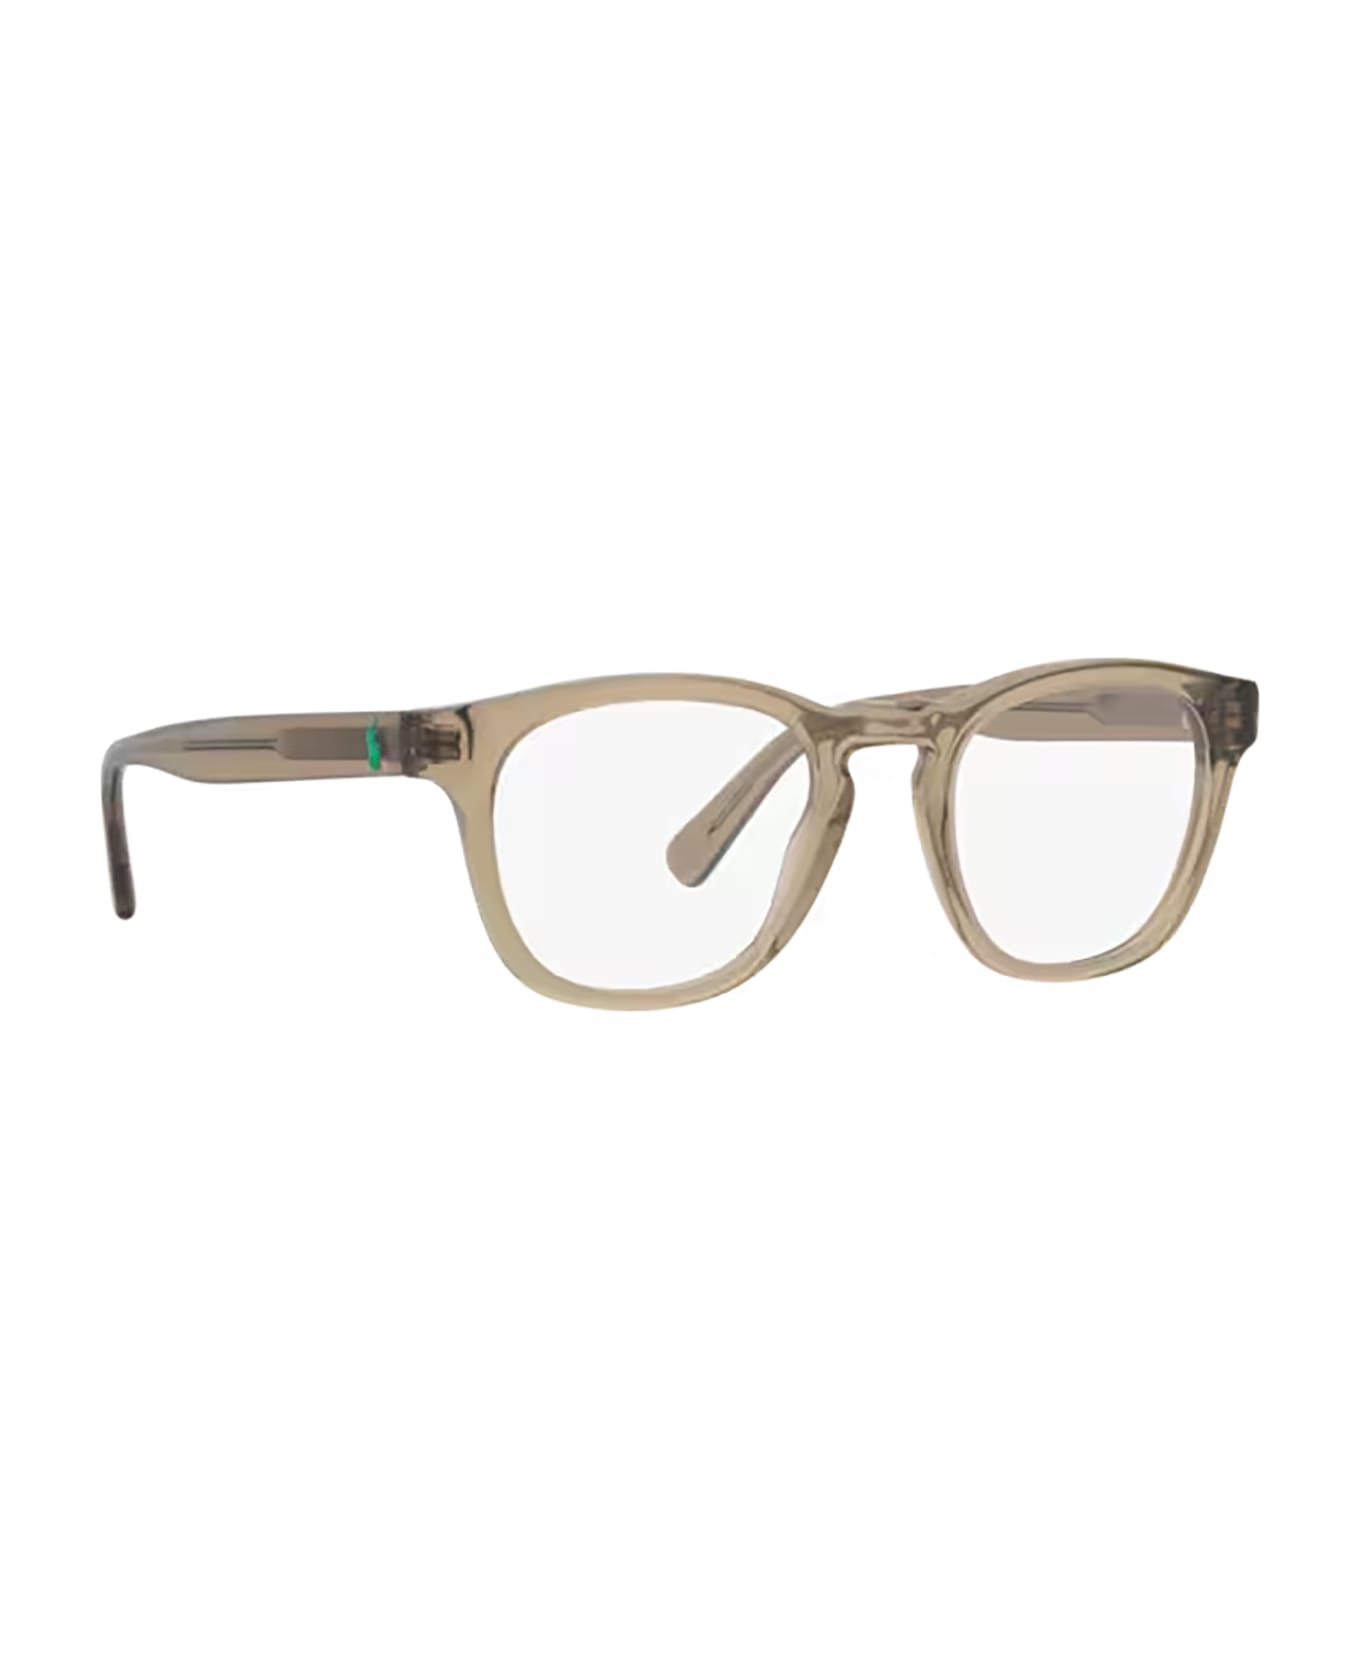 Polo Ralph Lauren Ph2258 Shiny Transparent Light Brown Glasses - Shiny Transparent Light Brown